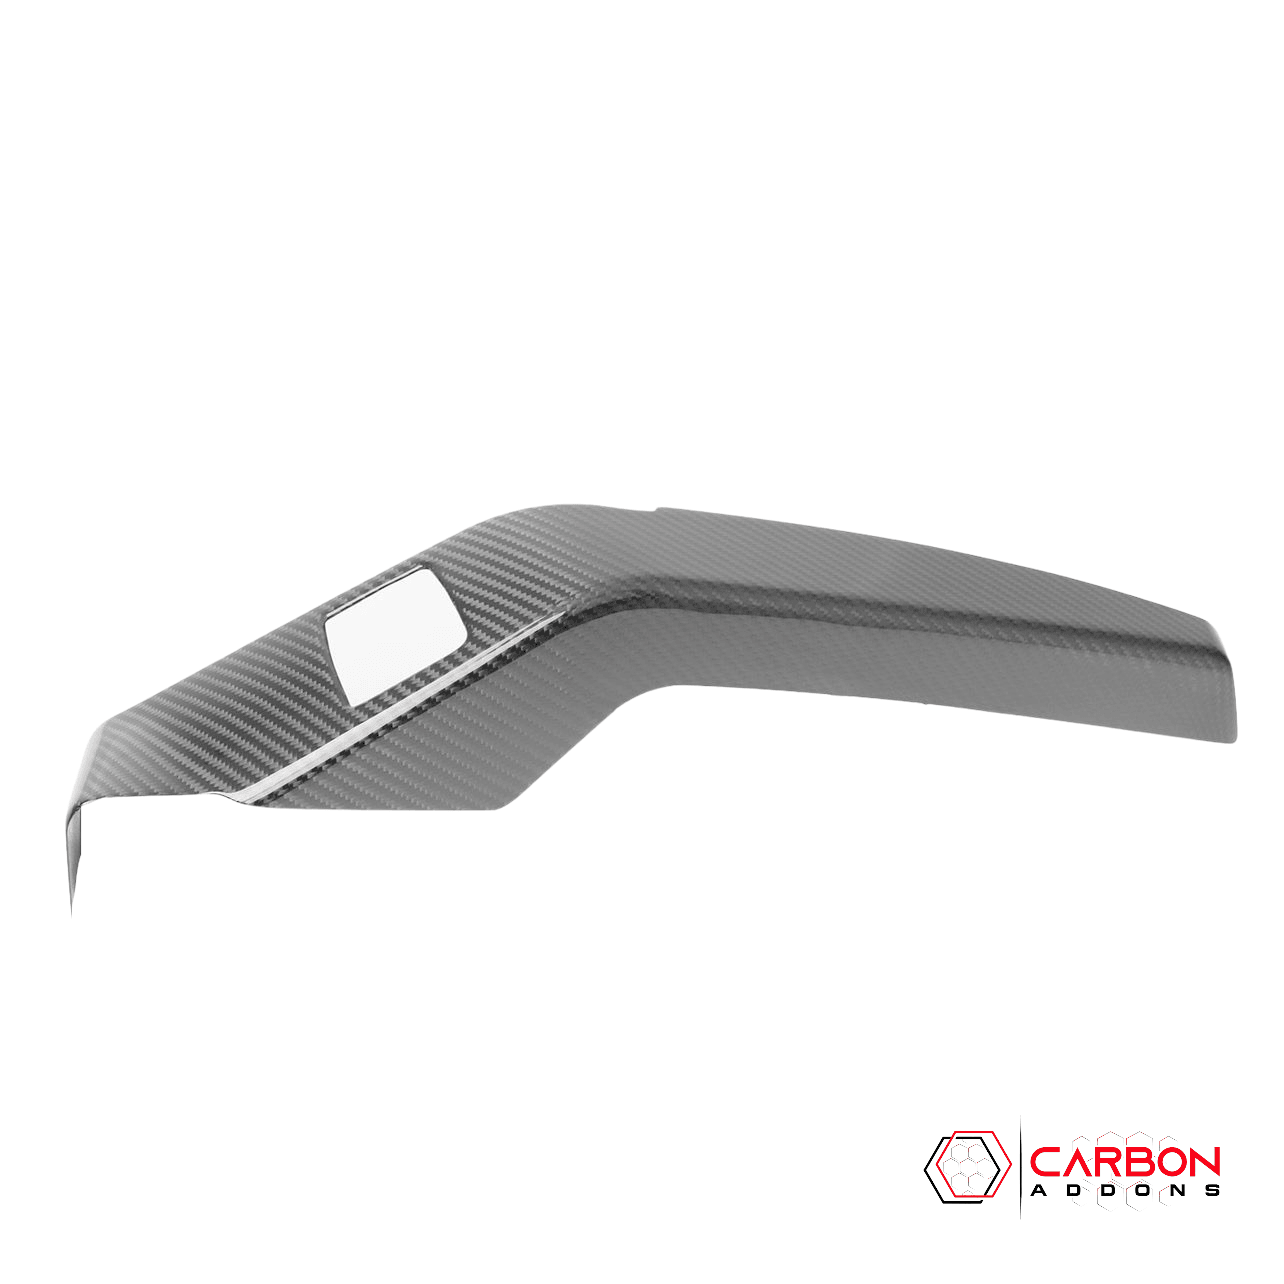 C7 Corvette 2014-2019 Carbon Fiber Driver Side Door & Window Switch Panel Cover - carbonaddons Carbon Fiber Parts, Accessories, Upgrades, Mods